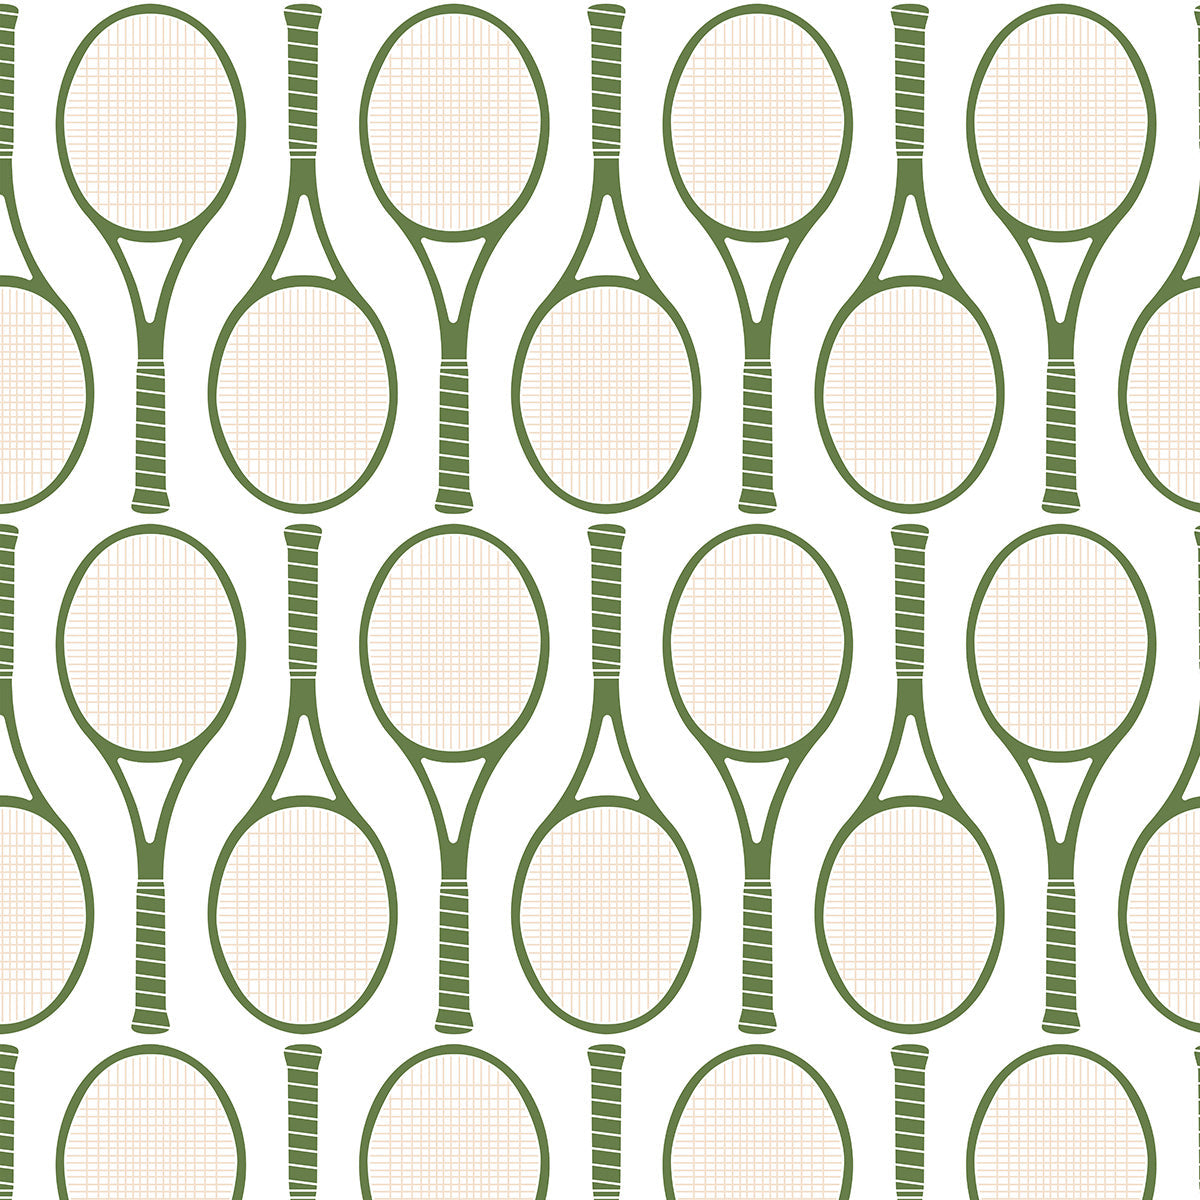 Wallpaper Double Roll / Green Tennis Racket Wallpaper Katie Kime